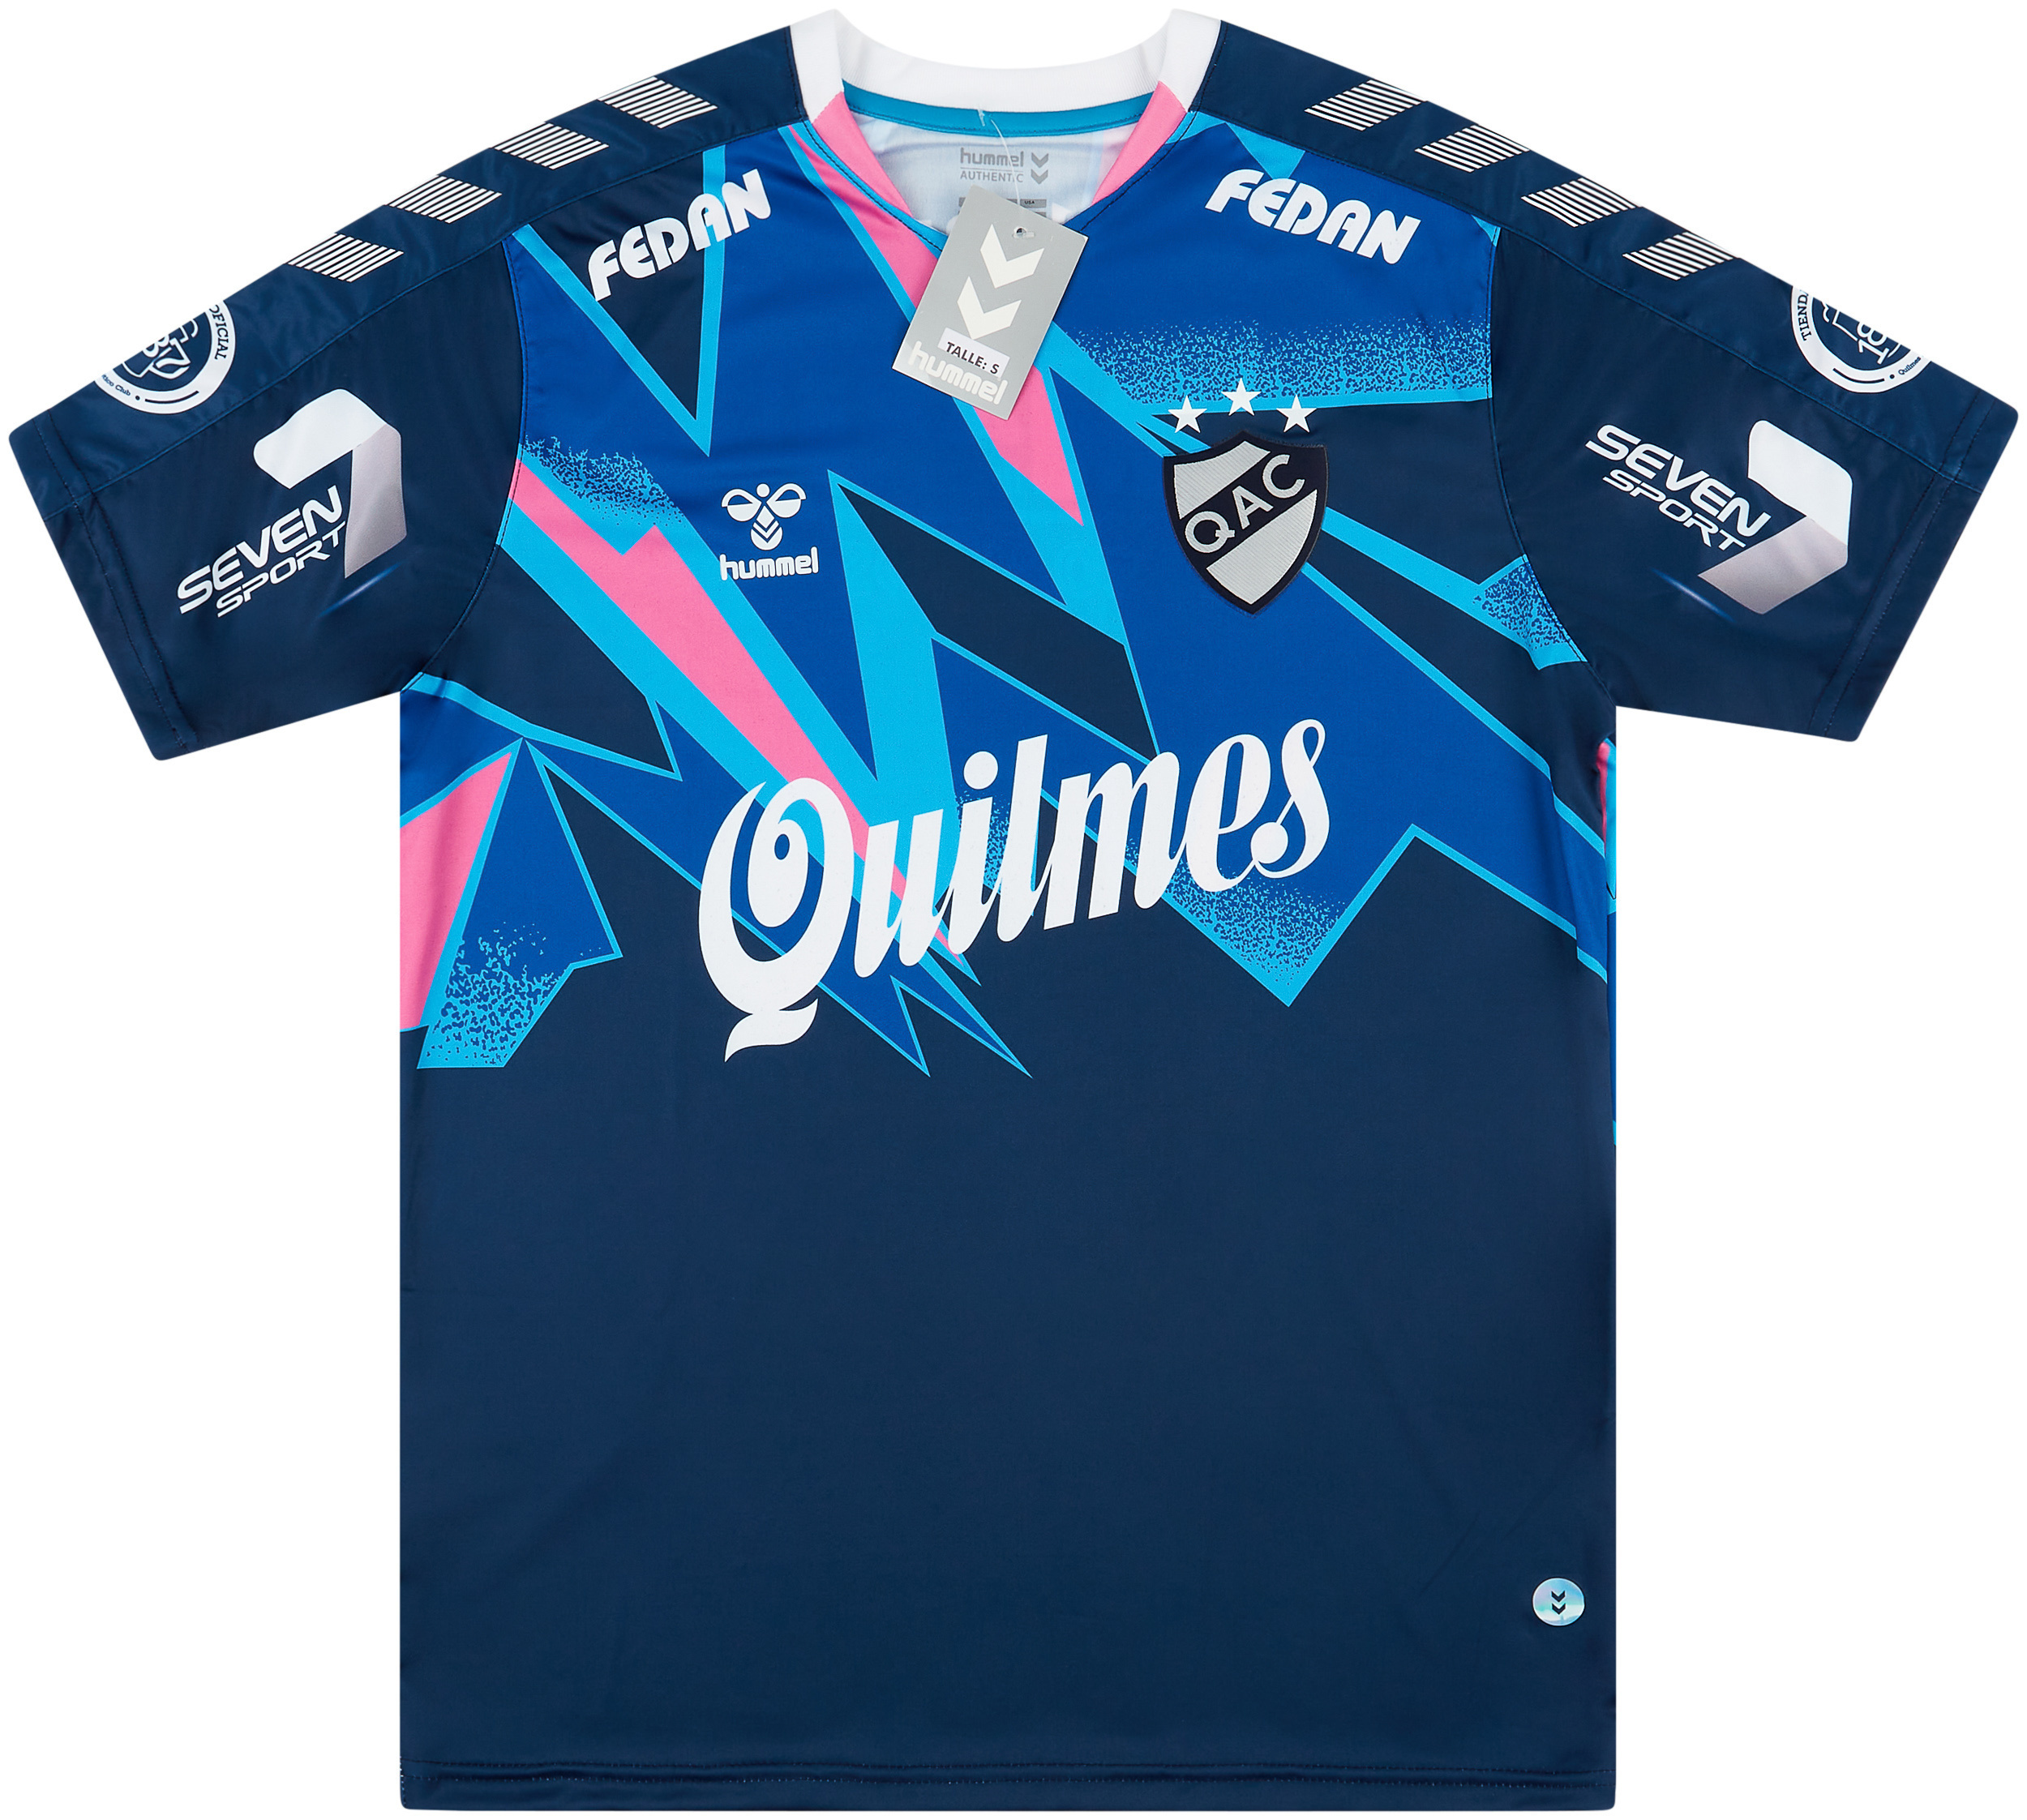 Quilmes  Fora camisa (Original)